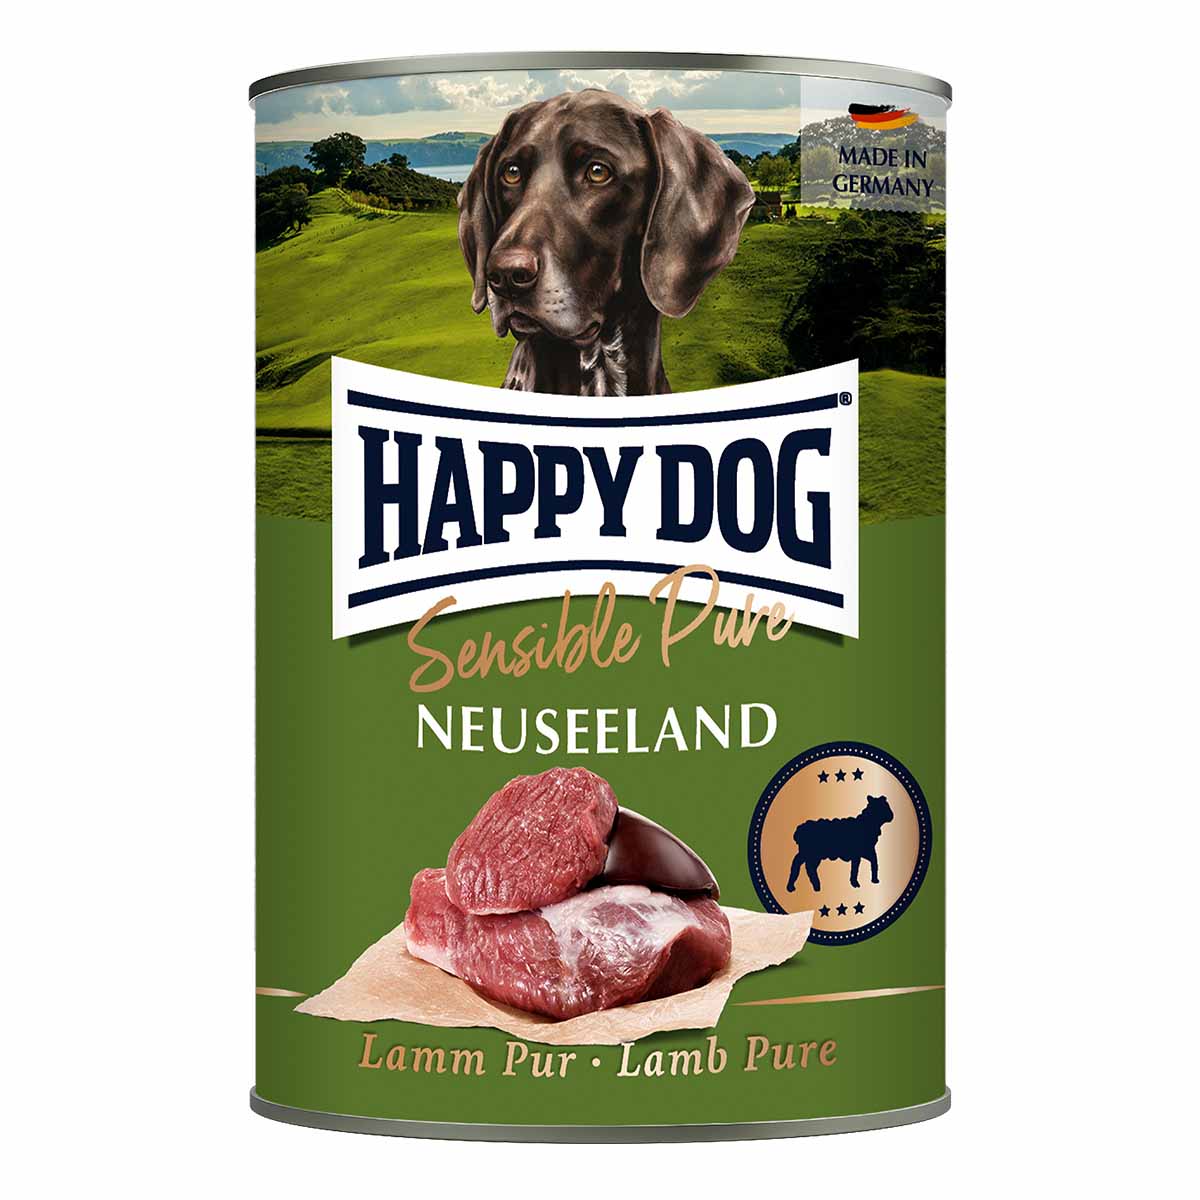 Happy Dog Sensible Pure Neuseeland (Lamm) 6x400g